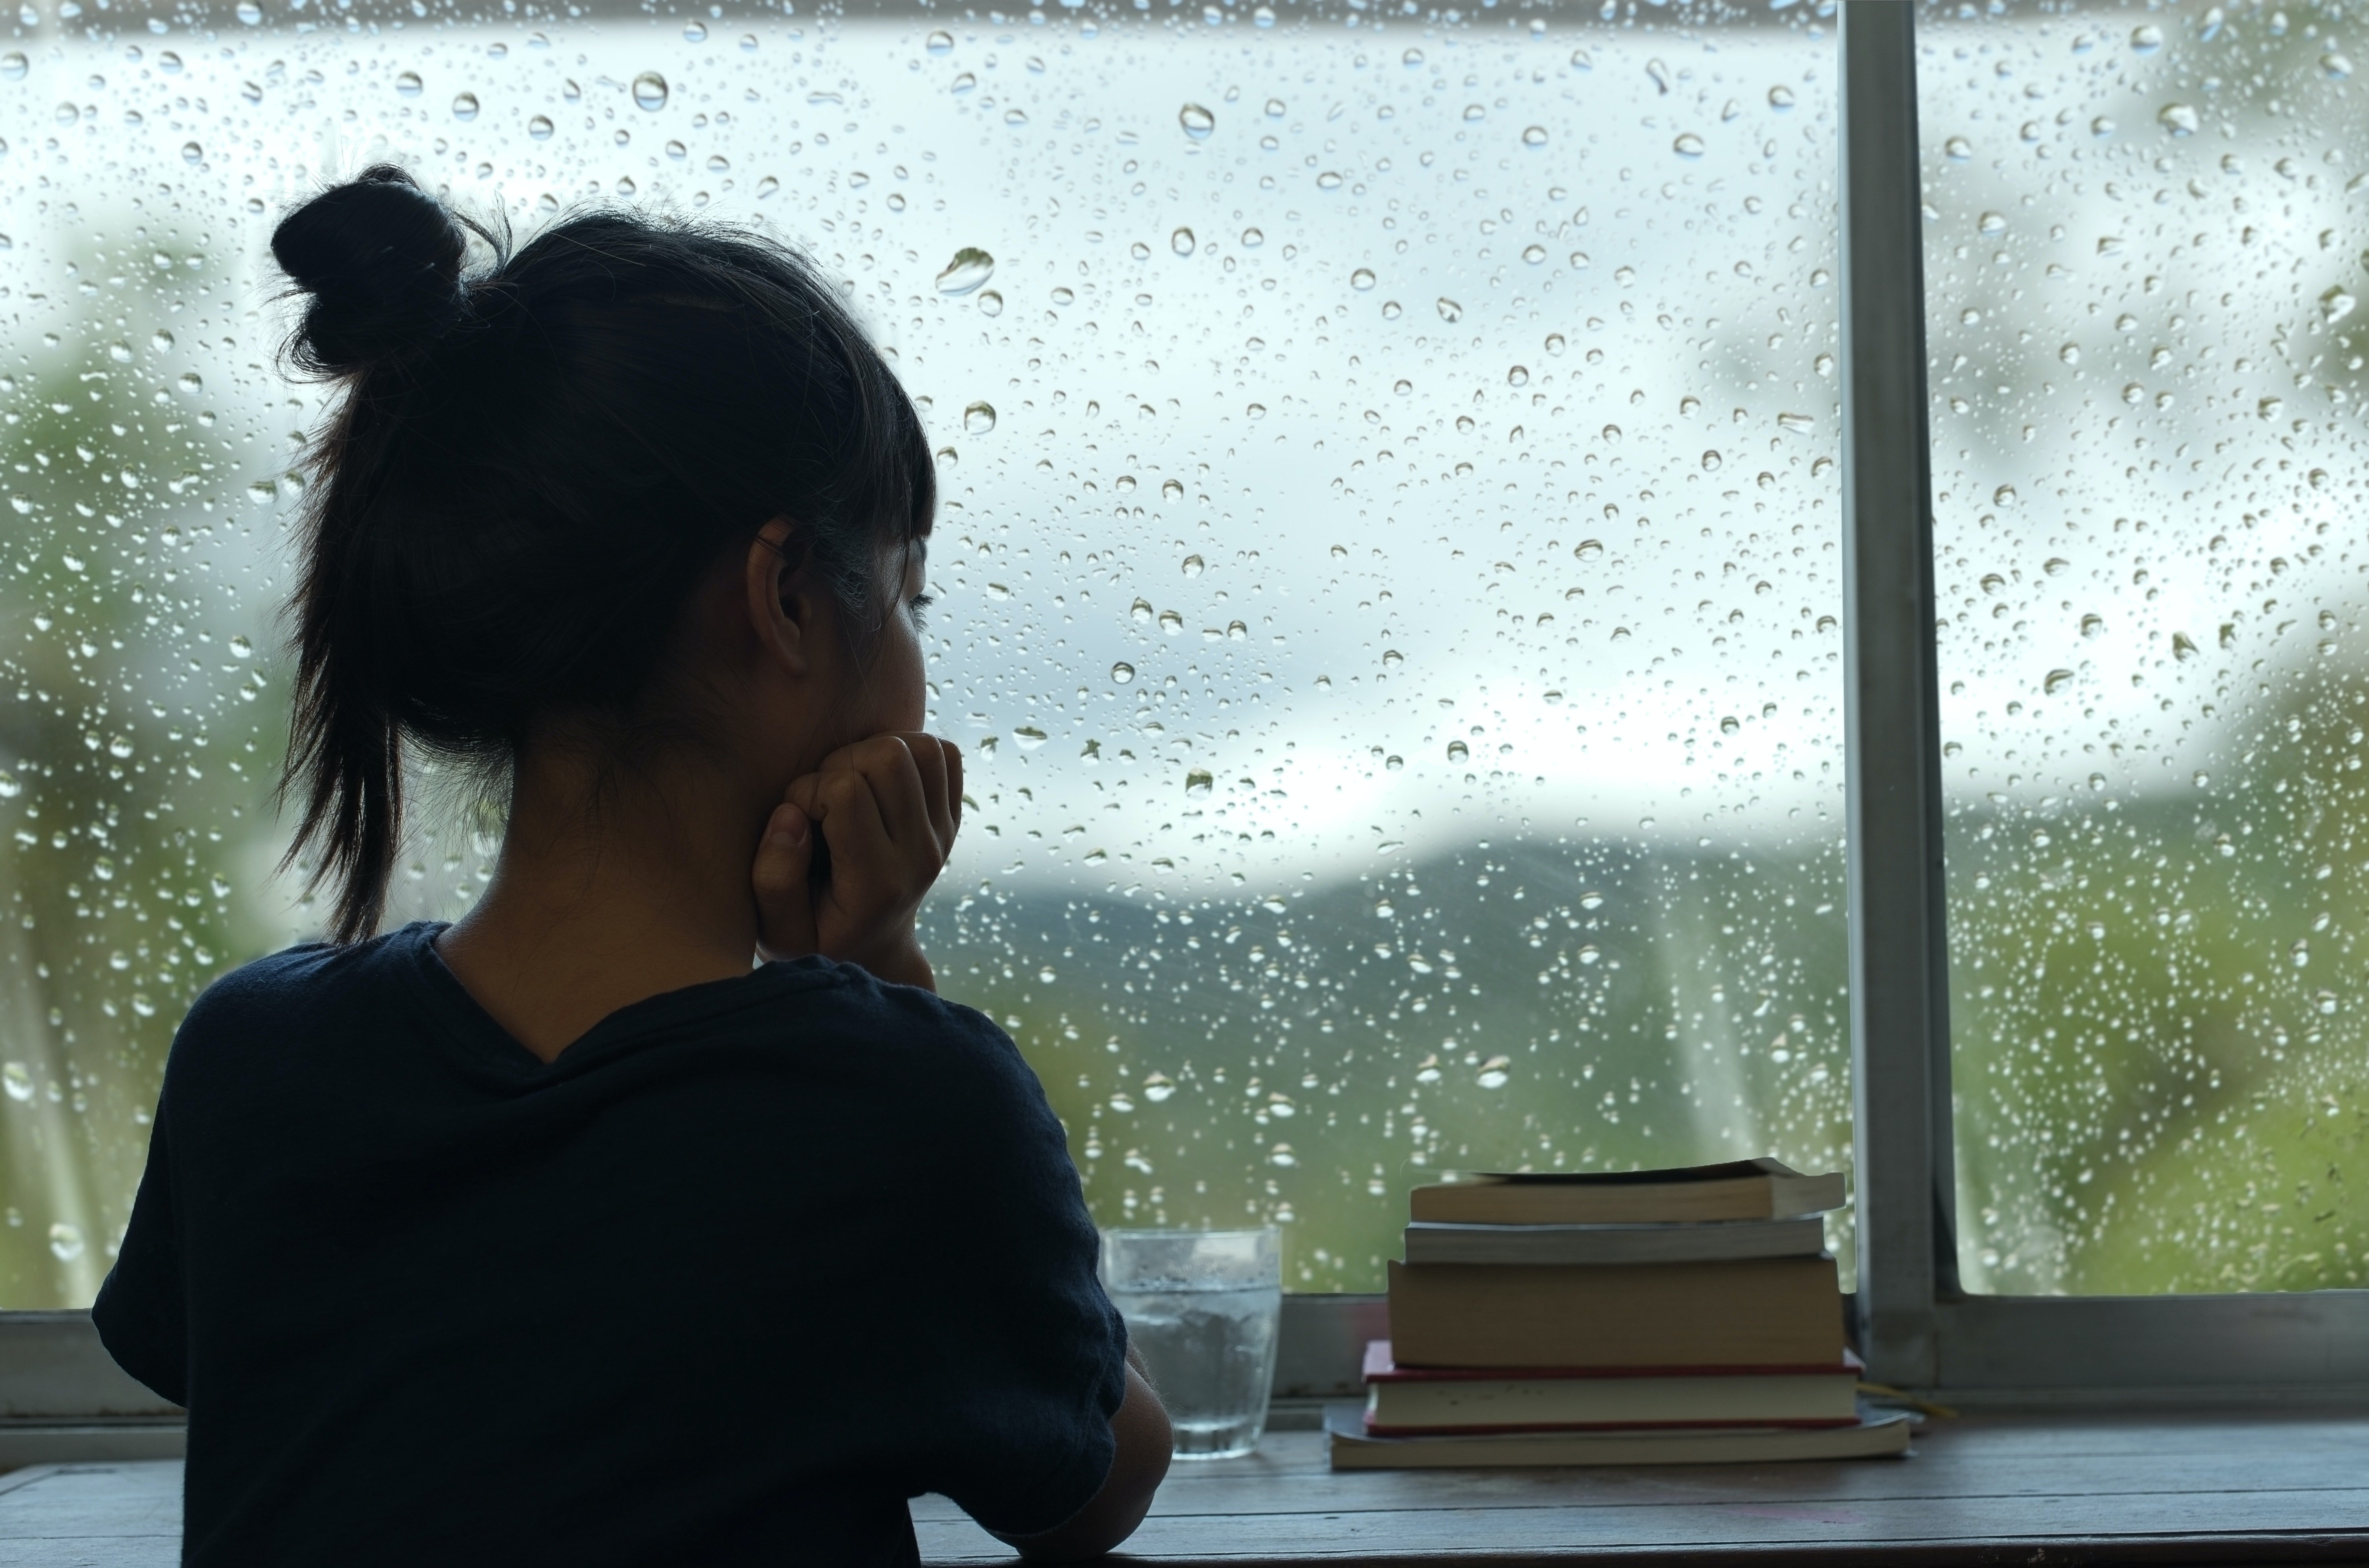 I looked out of the window. Девушка у окна дождь. Девушка за окном дождь. Человек у окна дождь. Девочка у окна.